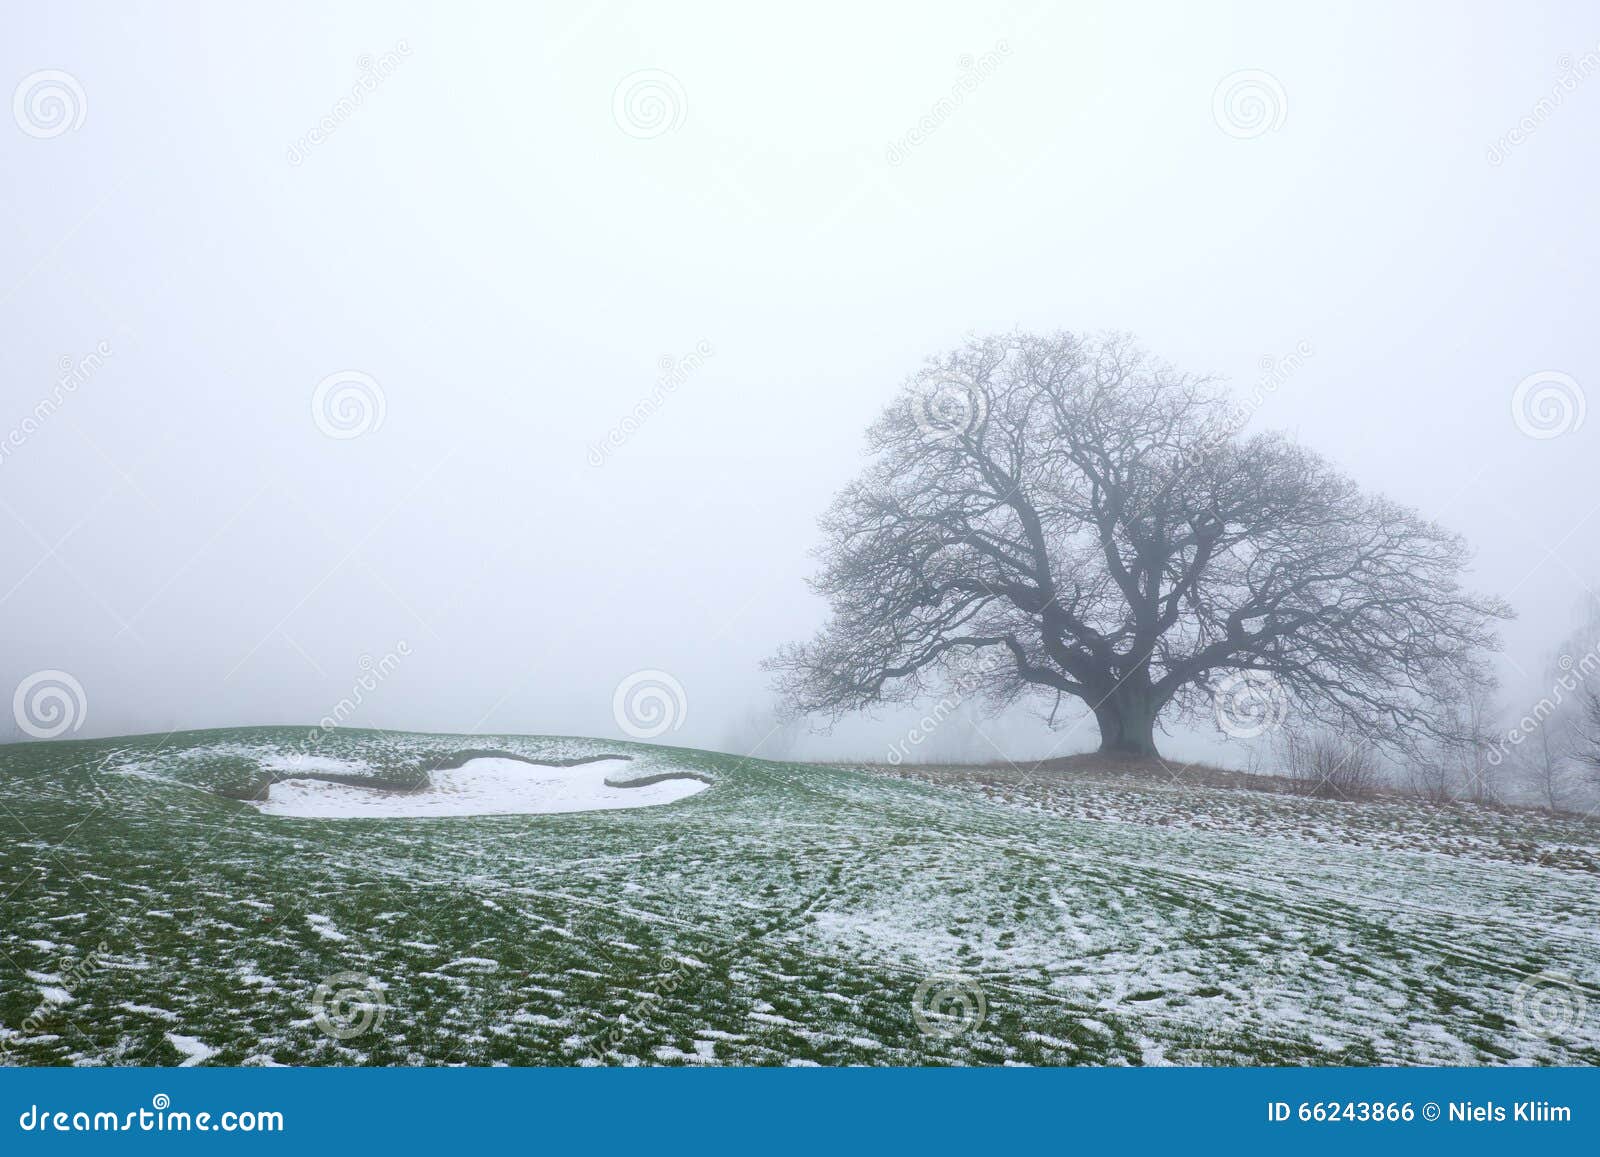 Winter, Snow, Tree, Freezing Picture. Image: 95623078